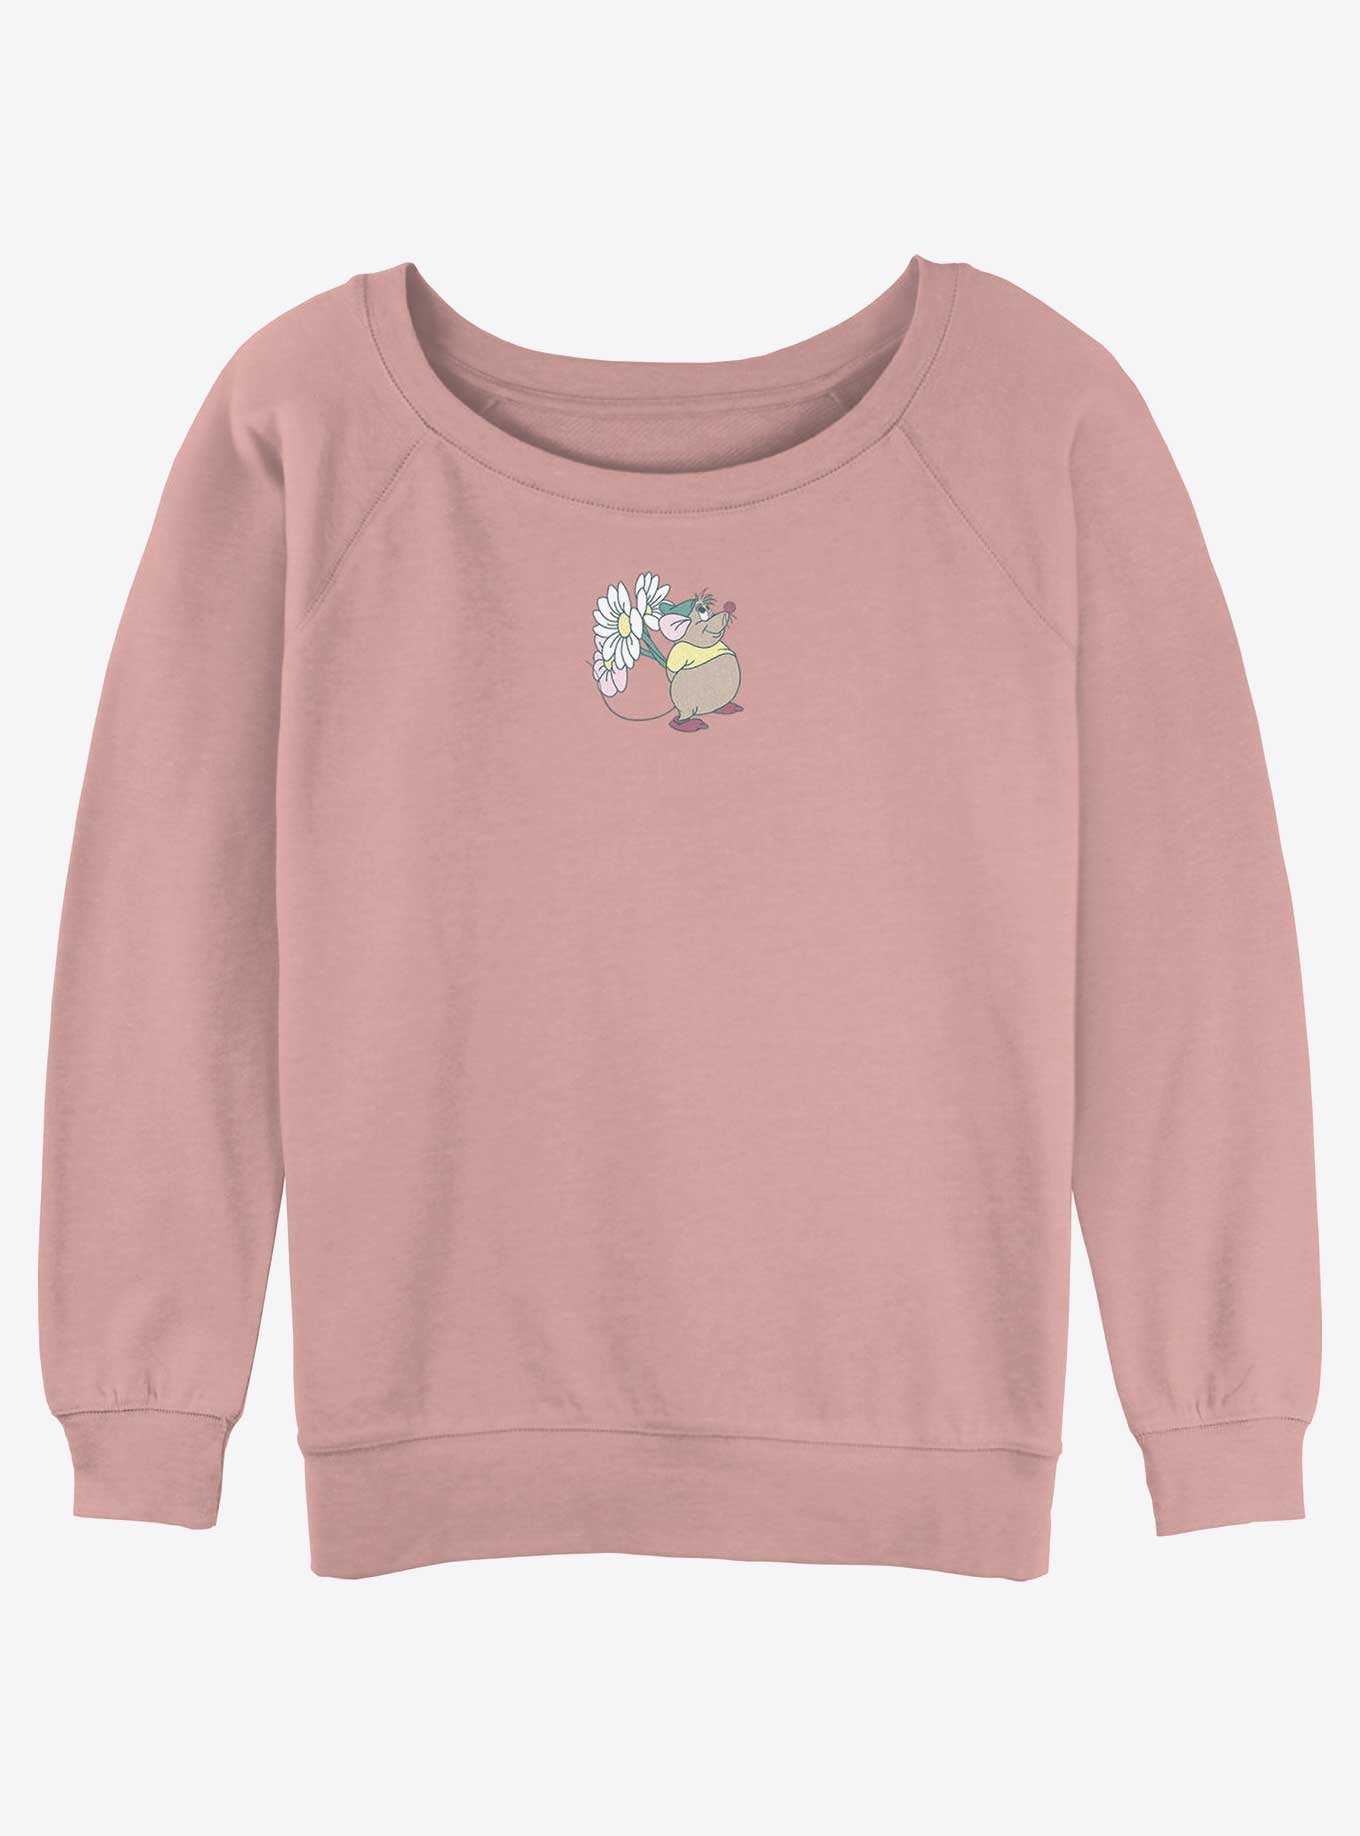 Disney Cinderella Cute Lil Gus Flower Girls Slouchy Sweatshirt, , hi-res